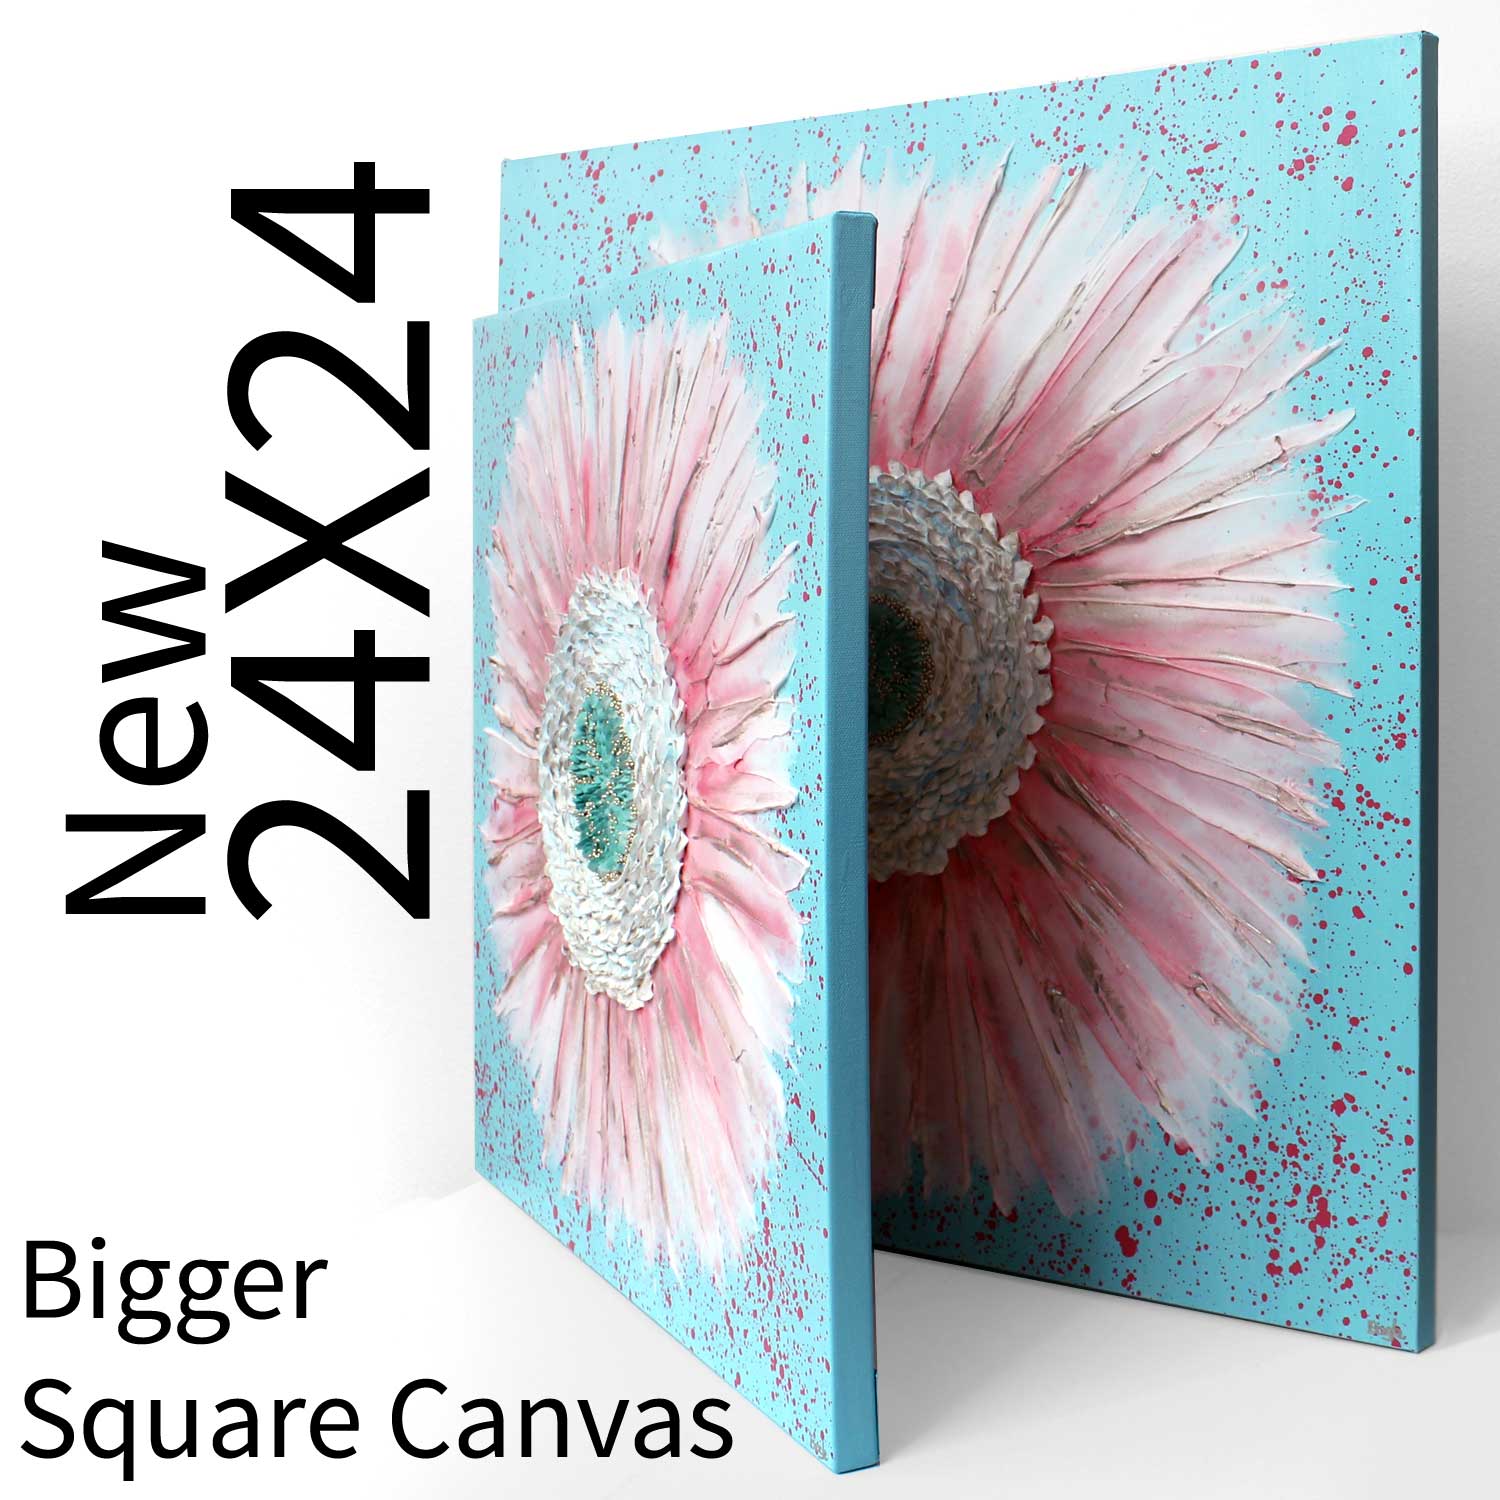 New Square Canvas Art Size 24x24